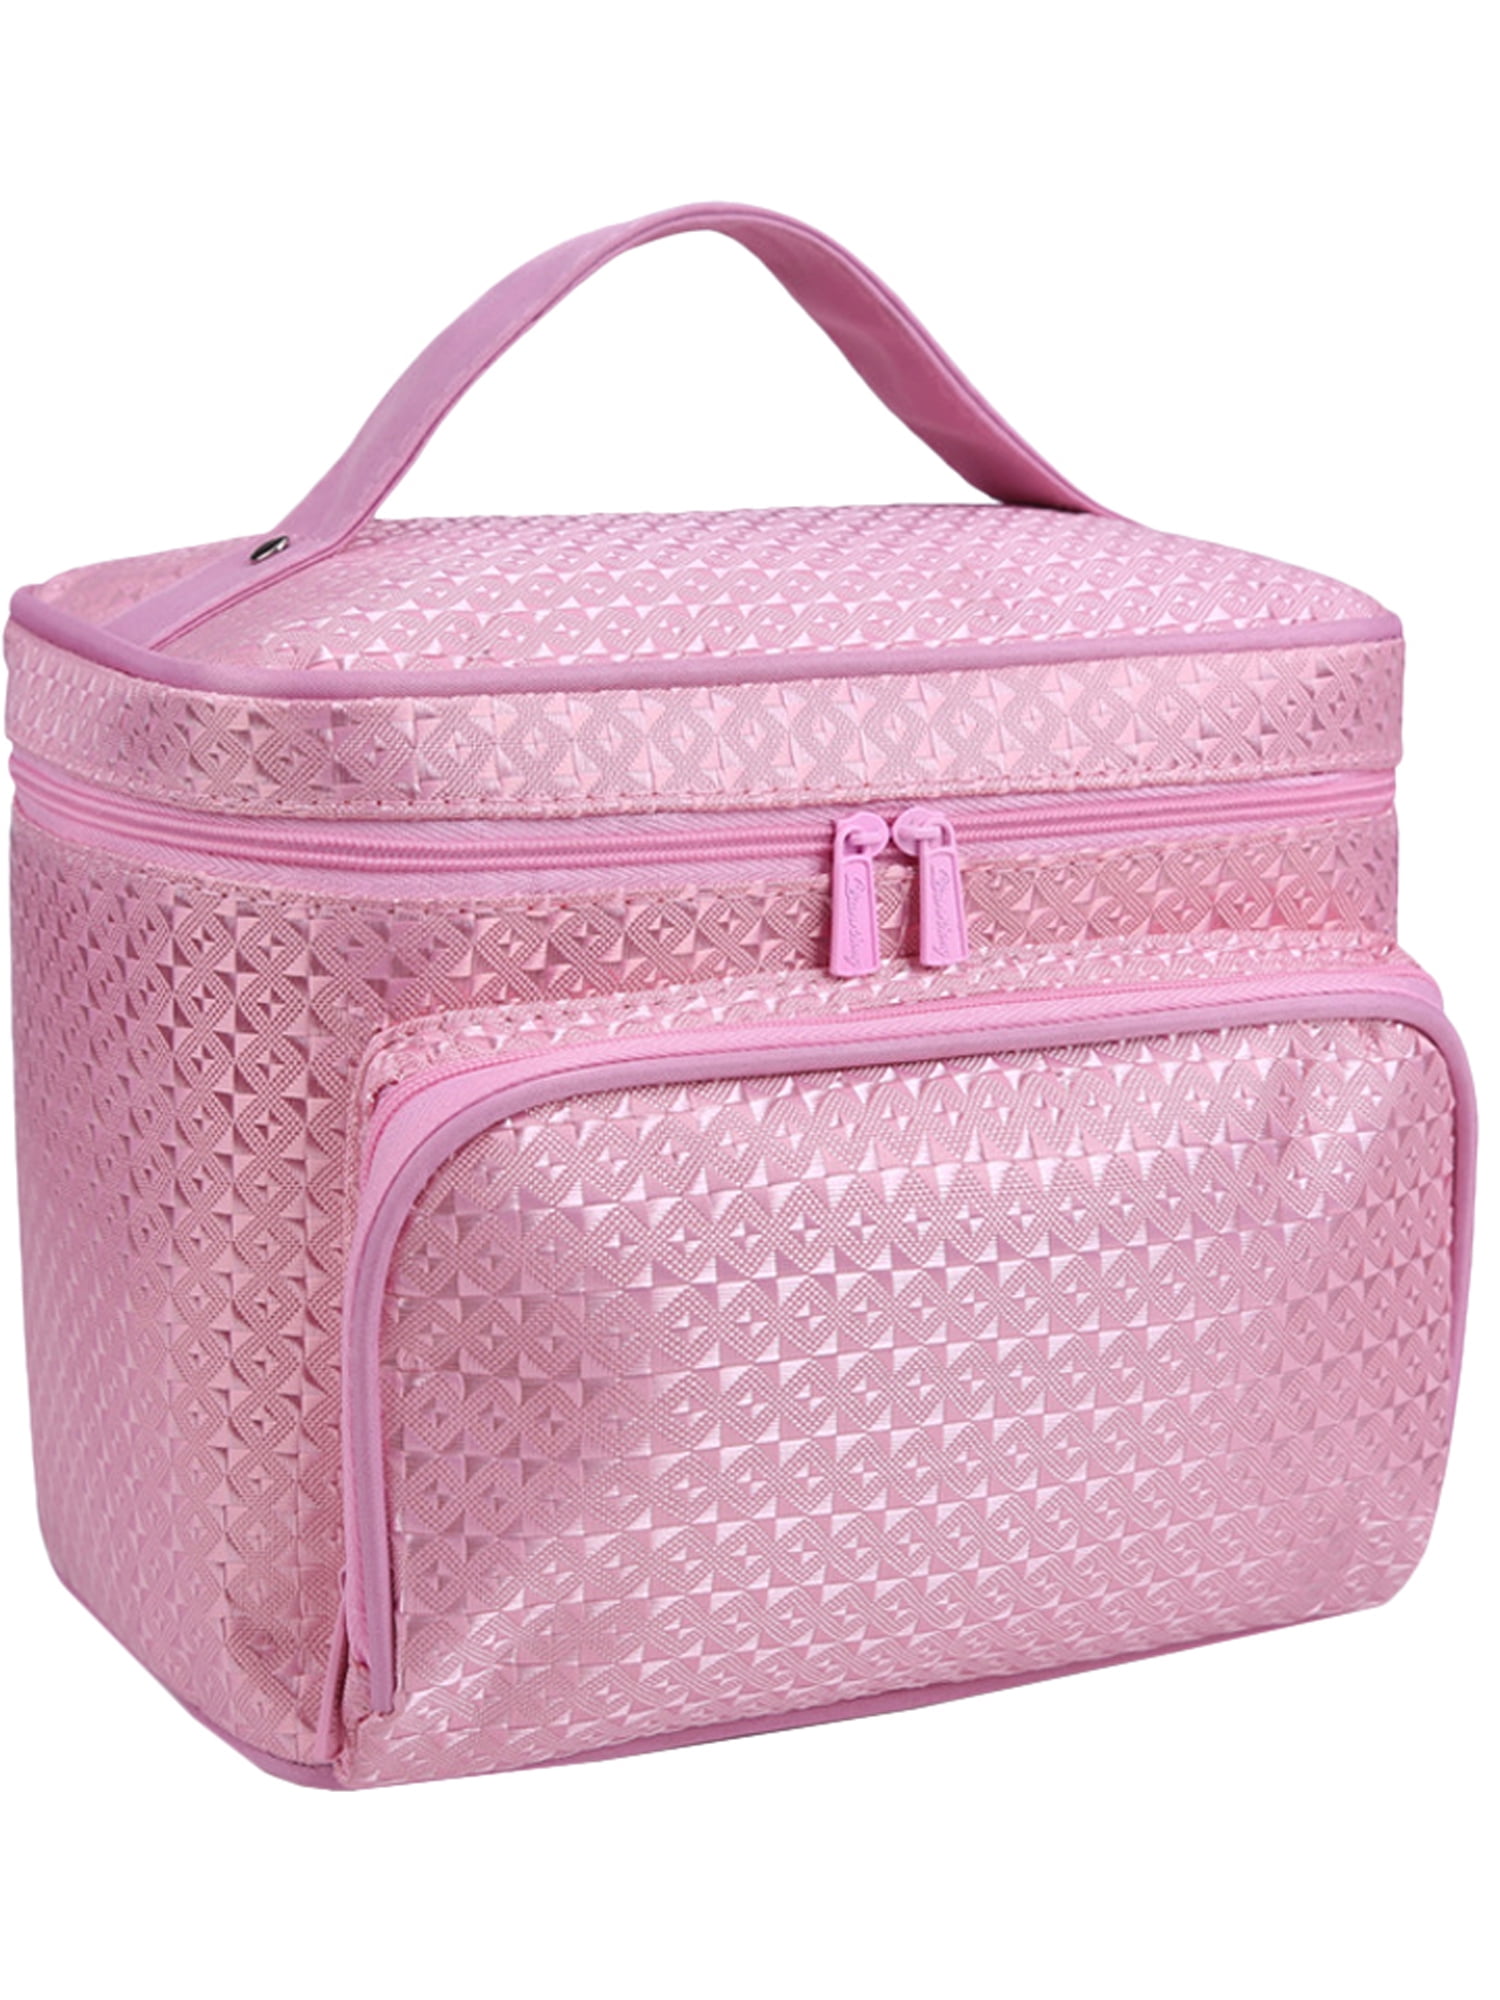 Women's Travel Nail Varnish Beauty Cosmetic Make Up Storage Bag Case ...